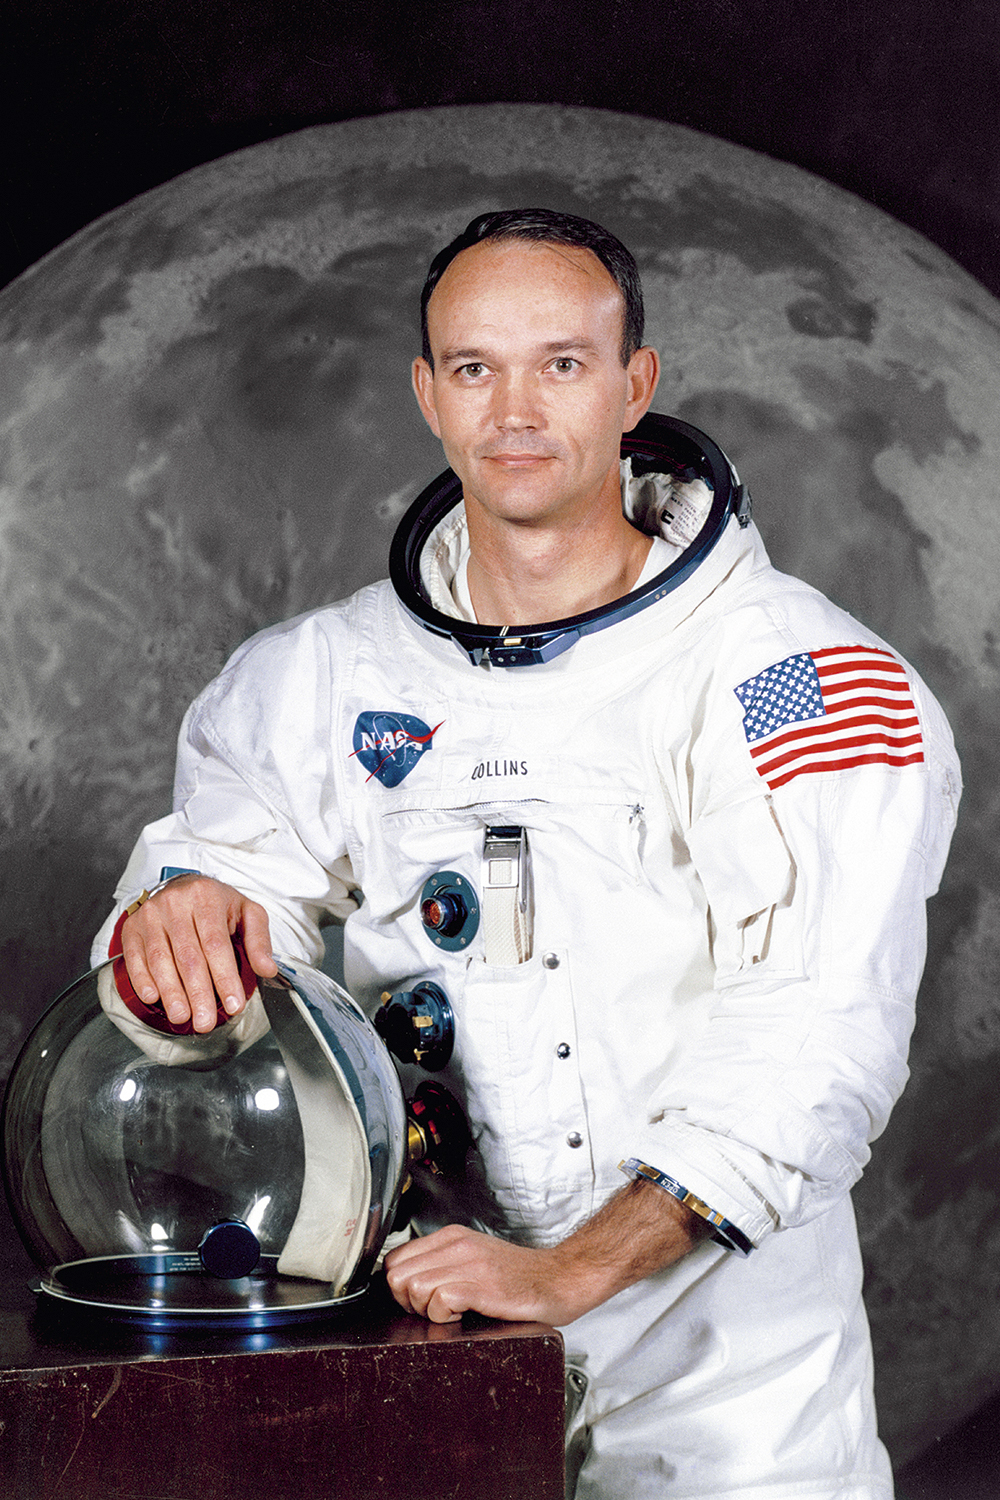 HERÓI - Michael Collins: ele levou os astronautas à Lua e os trouxe de volta -